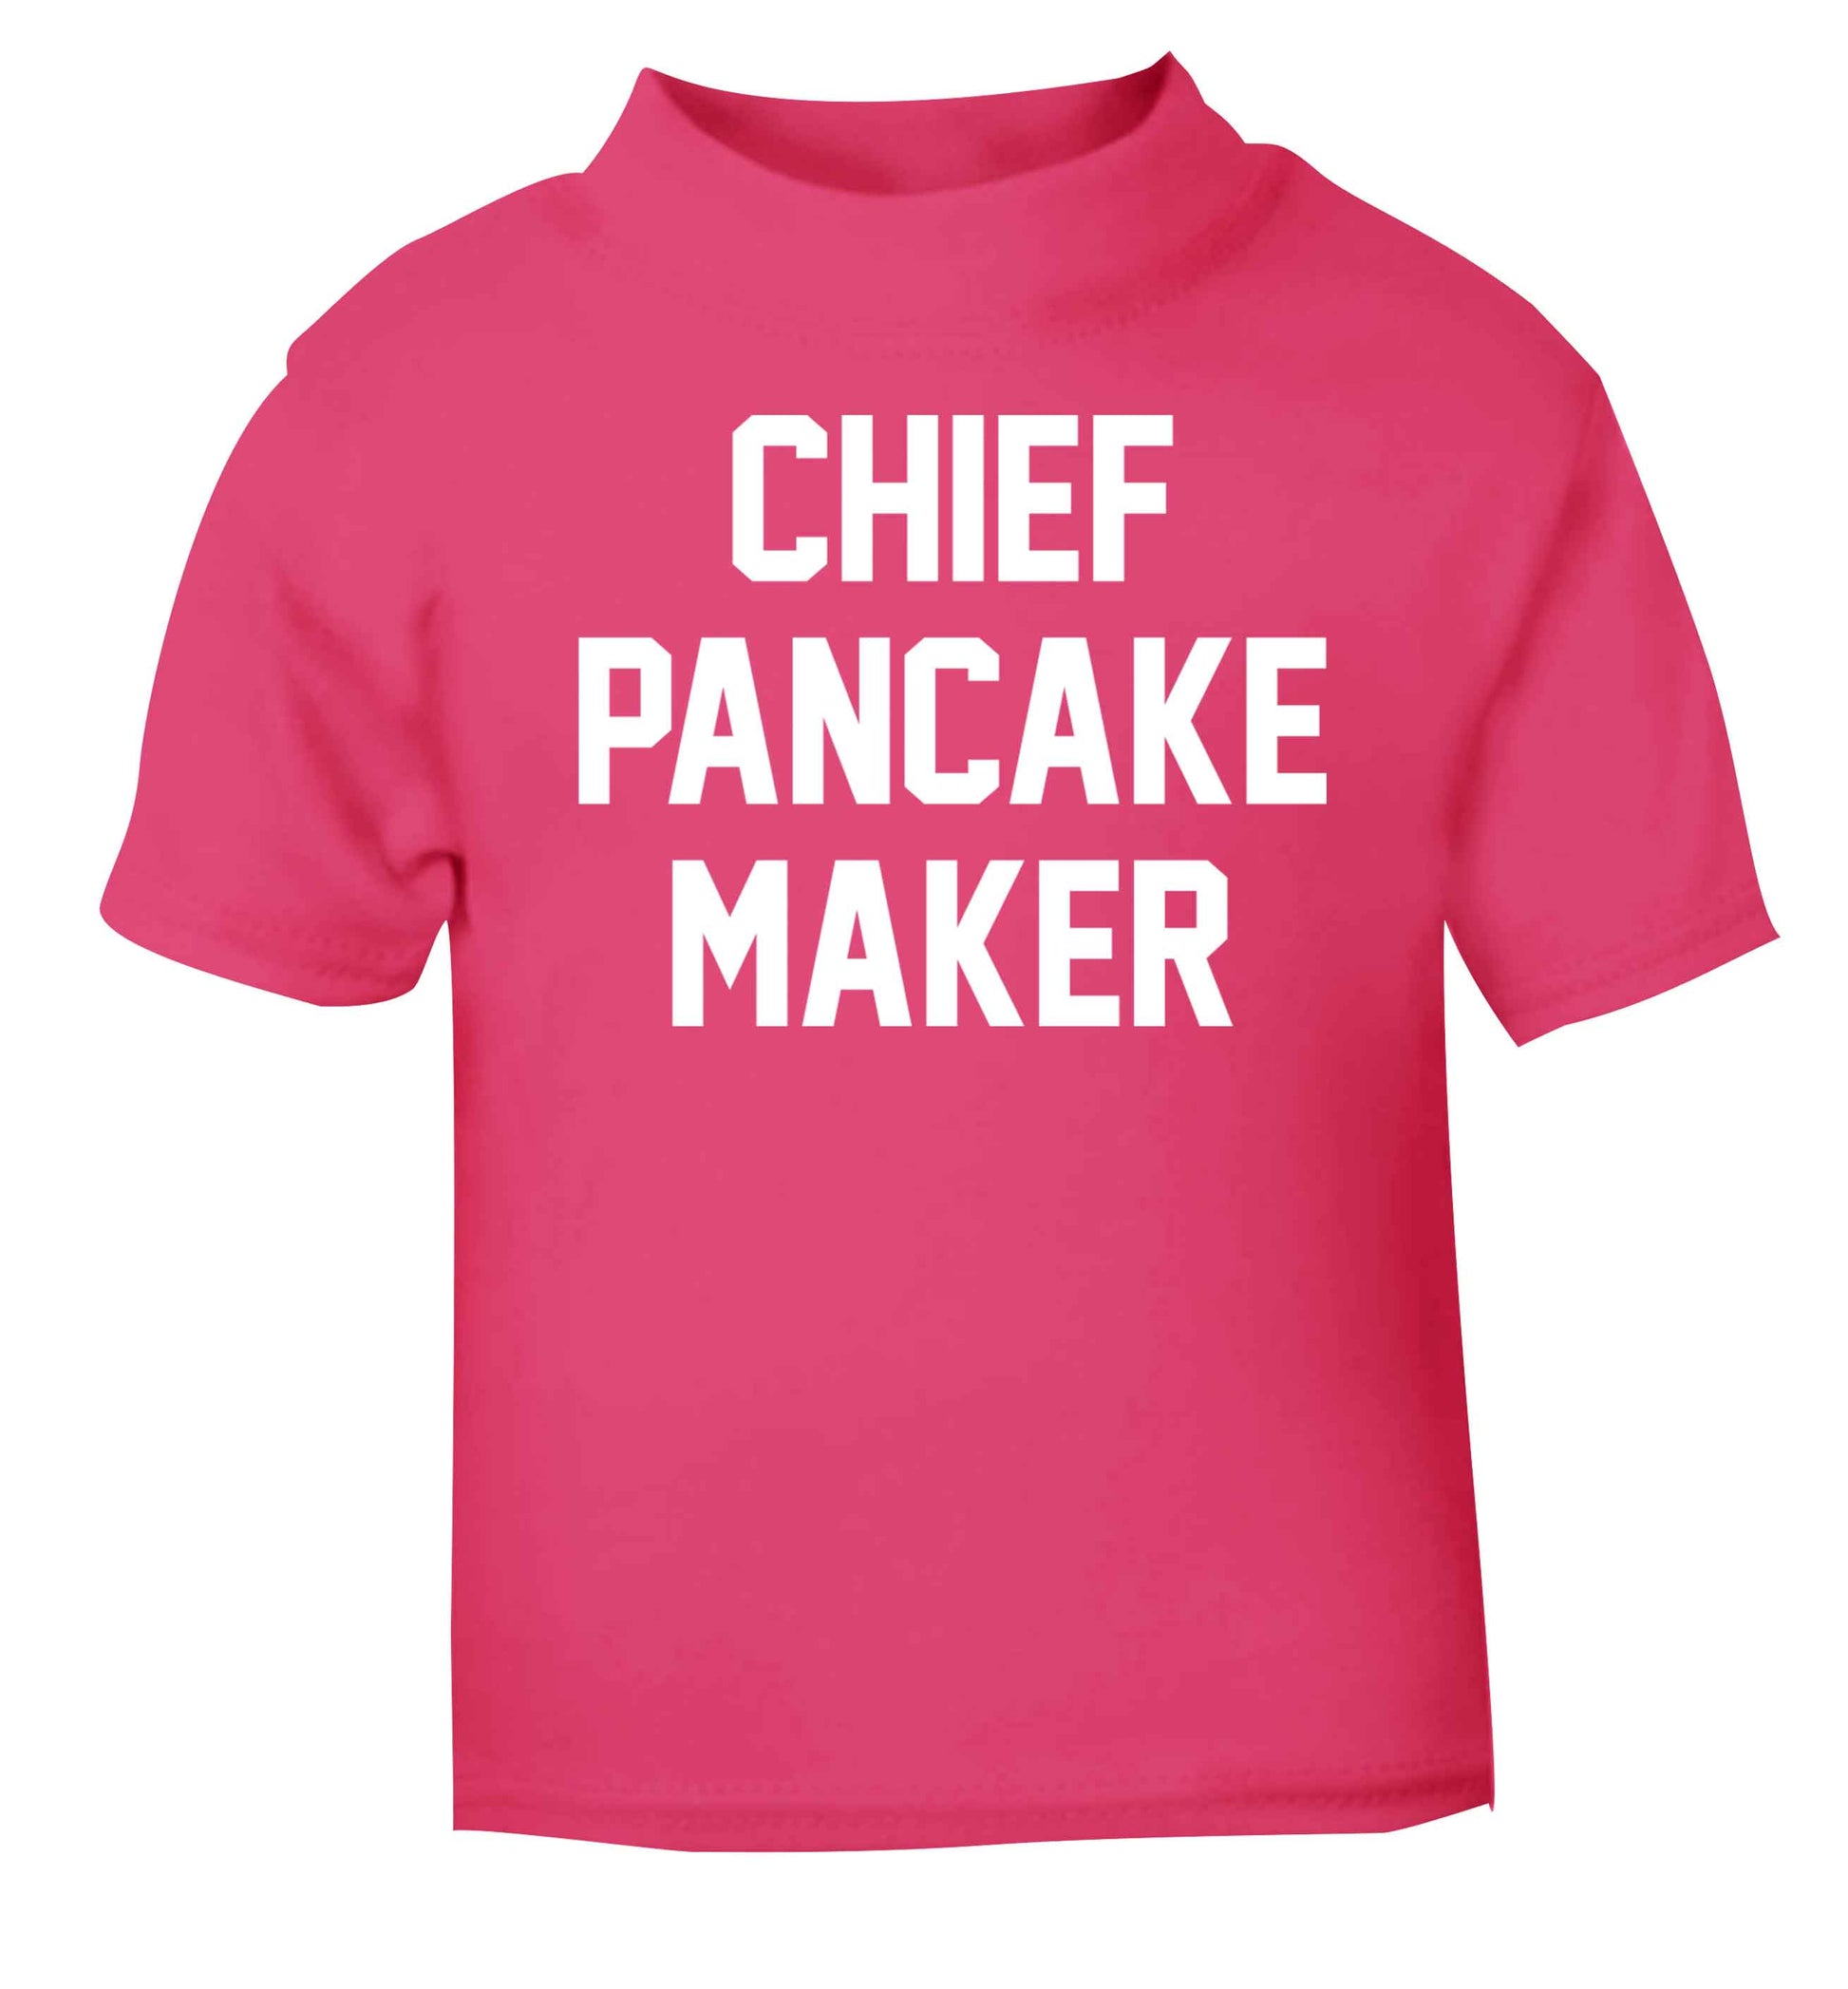 Chief pancake maker pink baby toddler Tshirt 2 Years